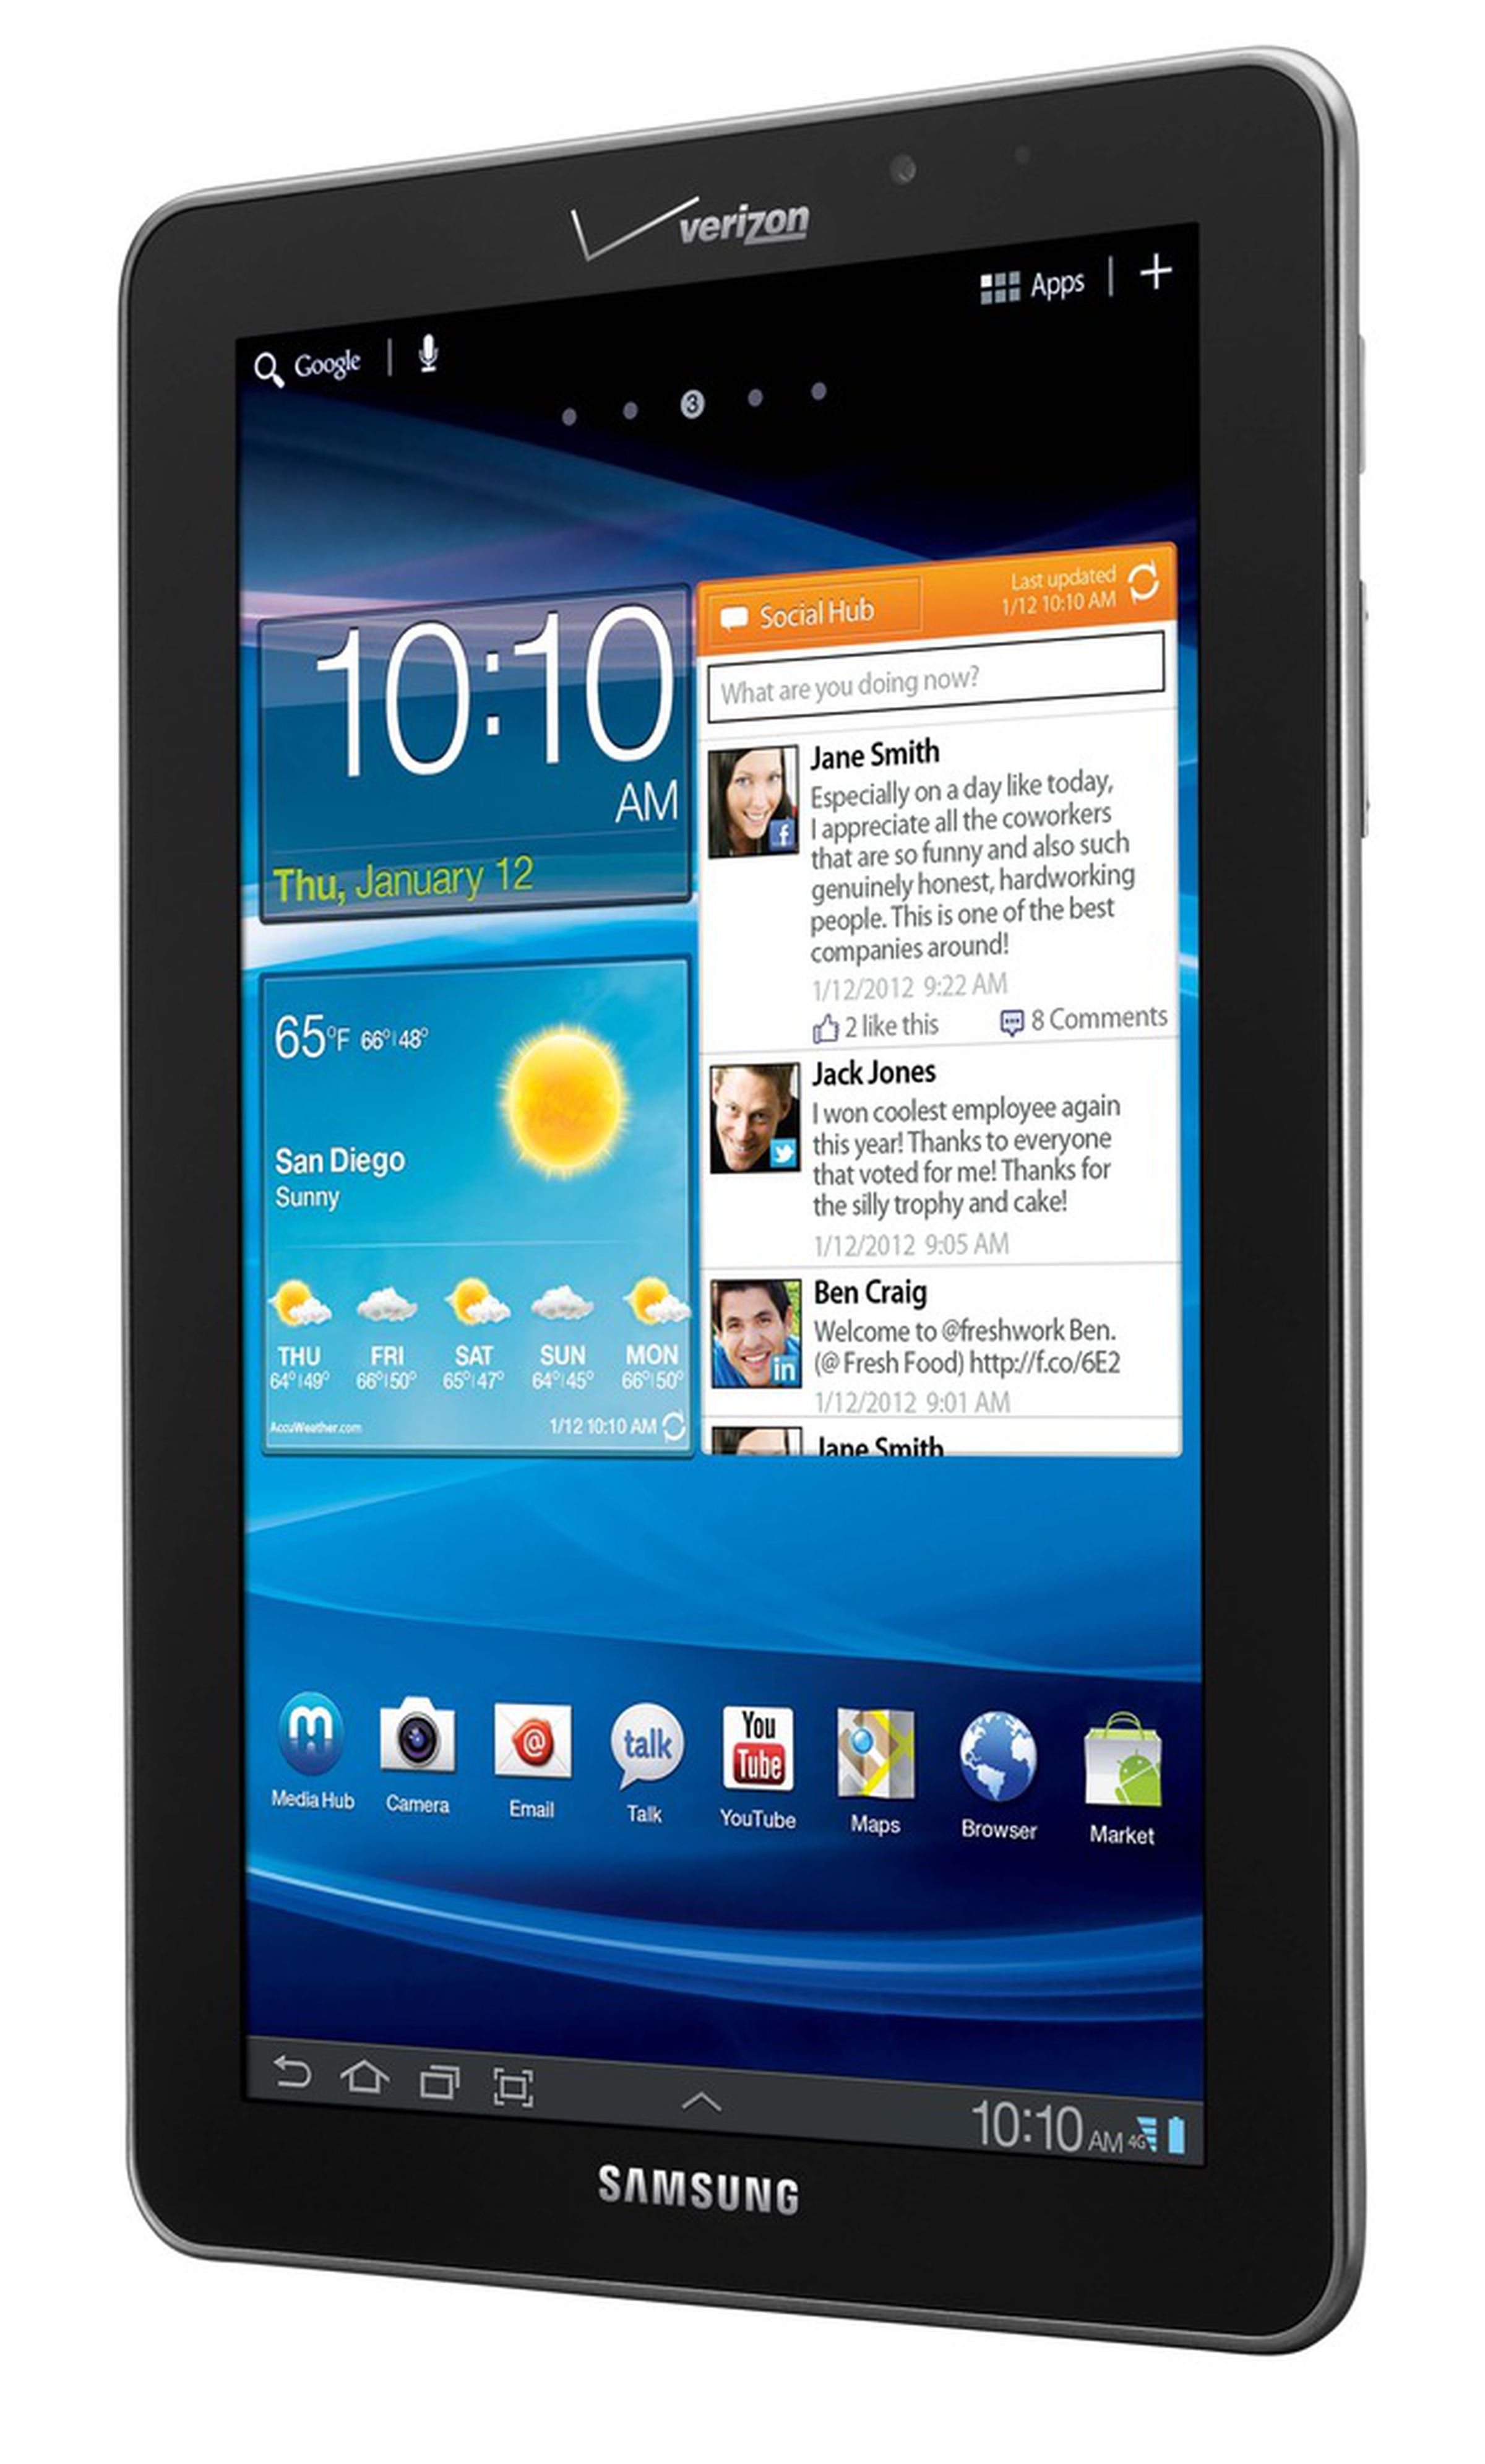 Samsung Galaxy Tab 7.7 for Verizon press pictures